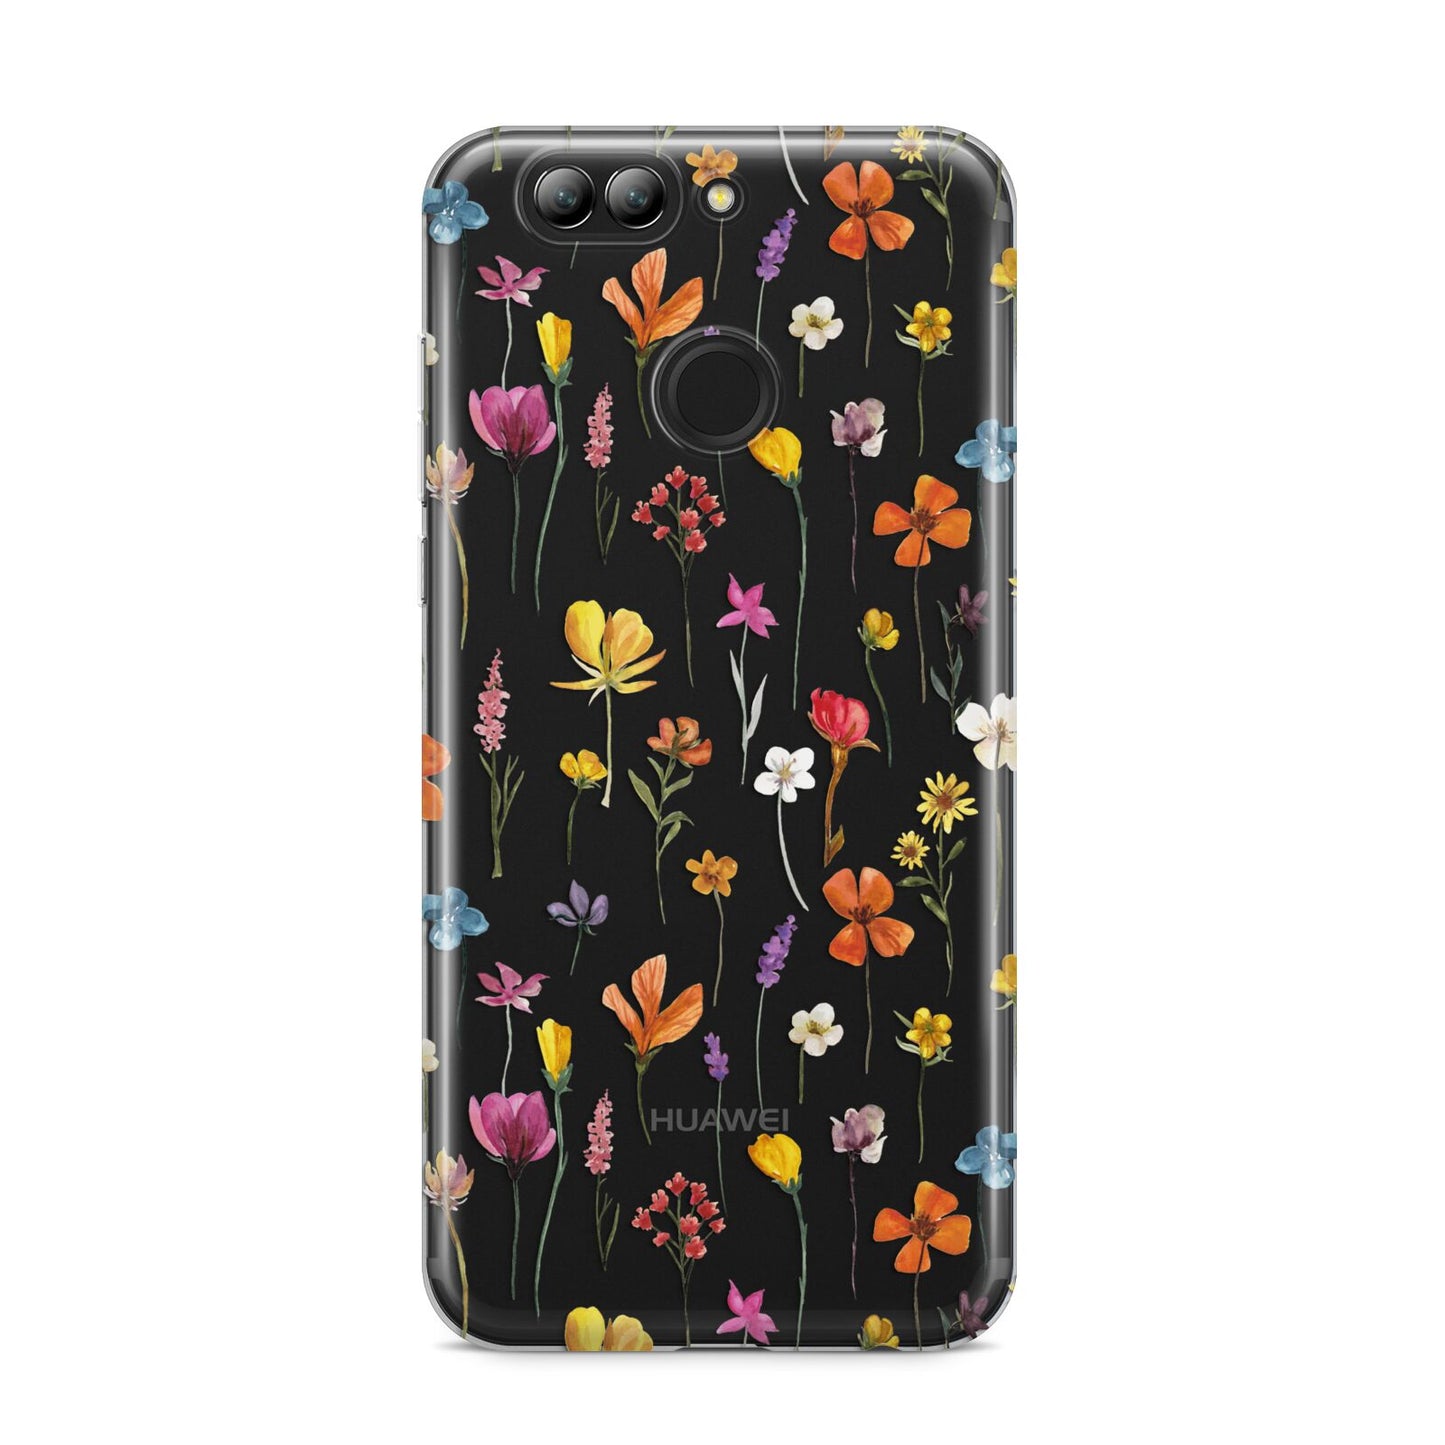 Botanical Floral Huawei Nova 2s Phone Case